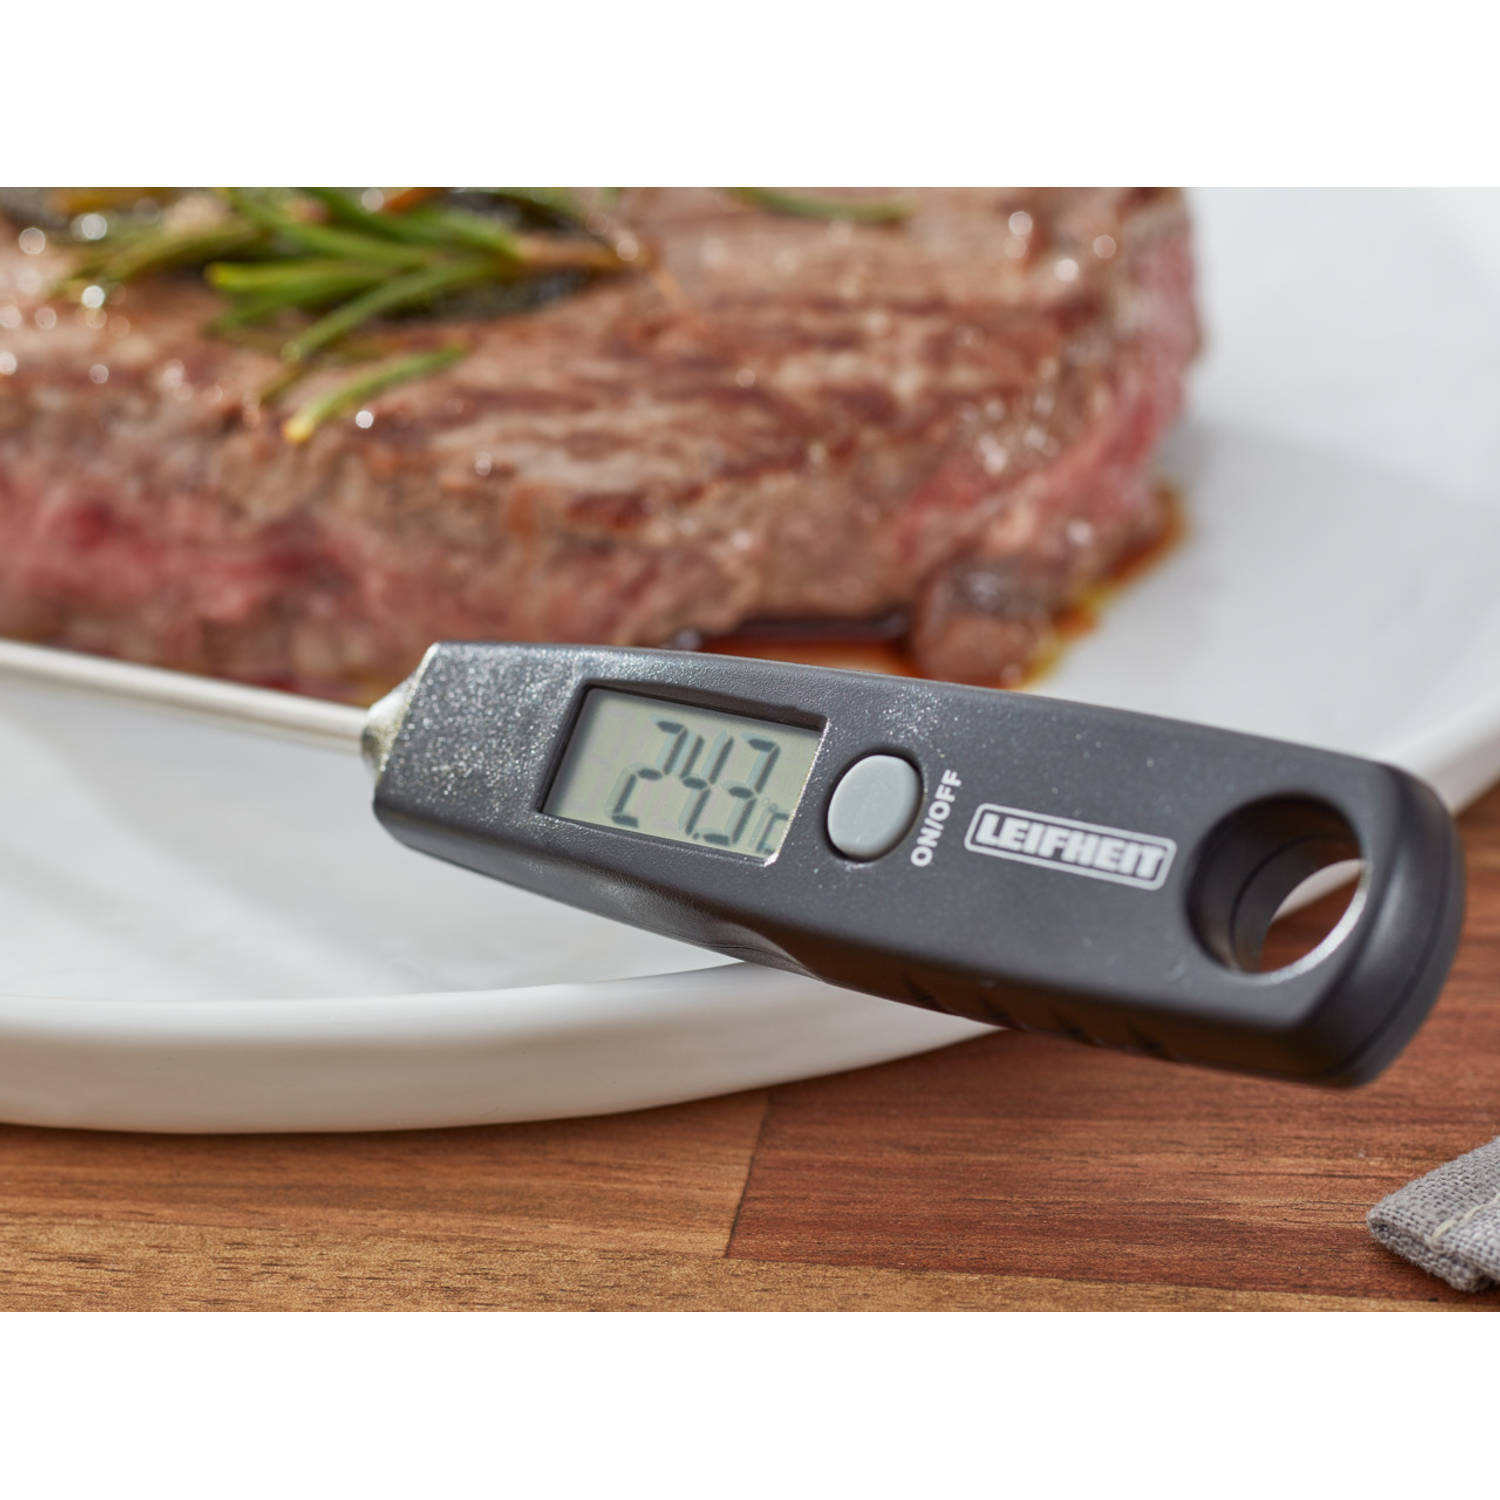 Besmettelijke ziekte lever R Leifheit digitale universele keukenthermometer | Blokker